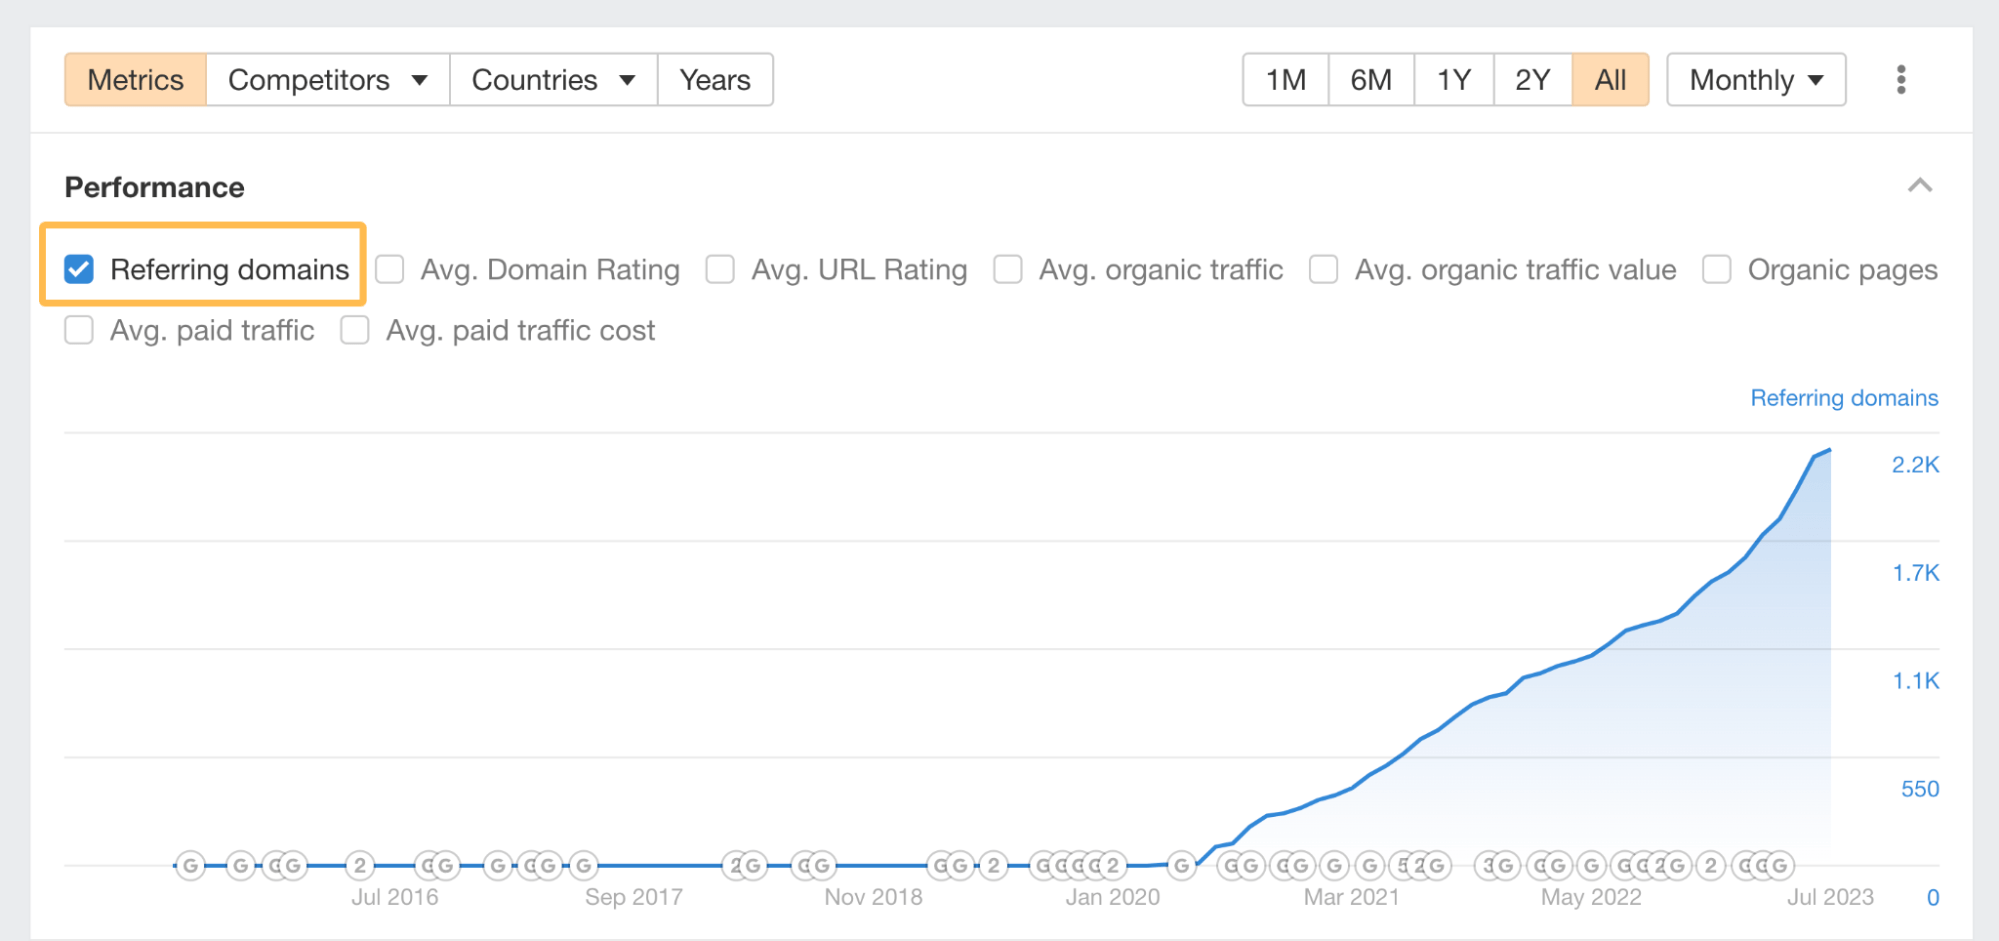 Referring domains rise for SEO statistics post, via Ahrefs' Site Explorer
